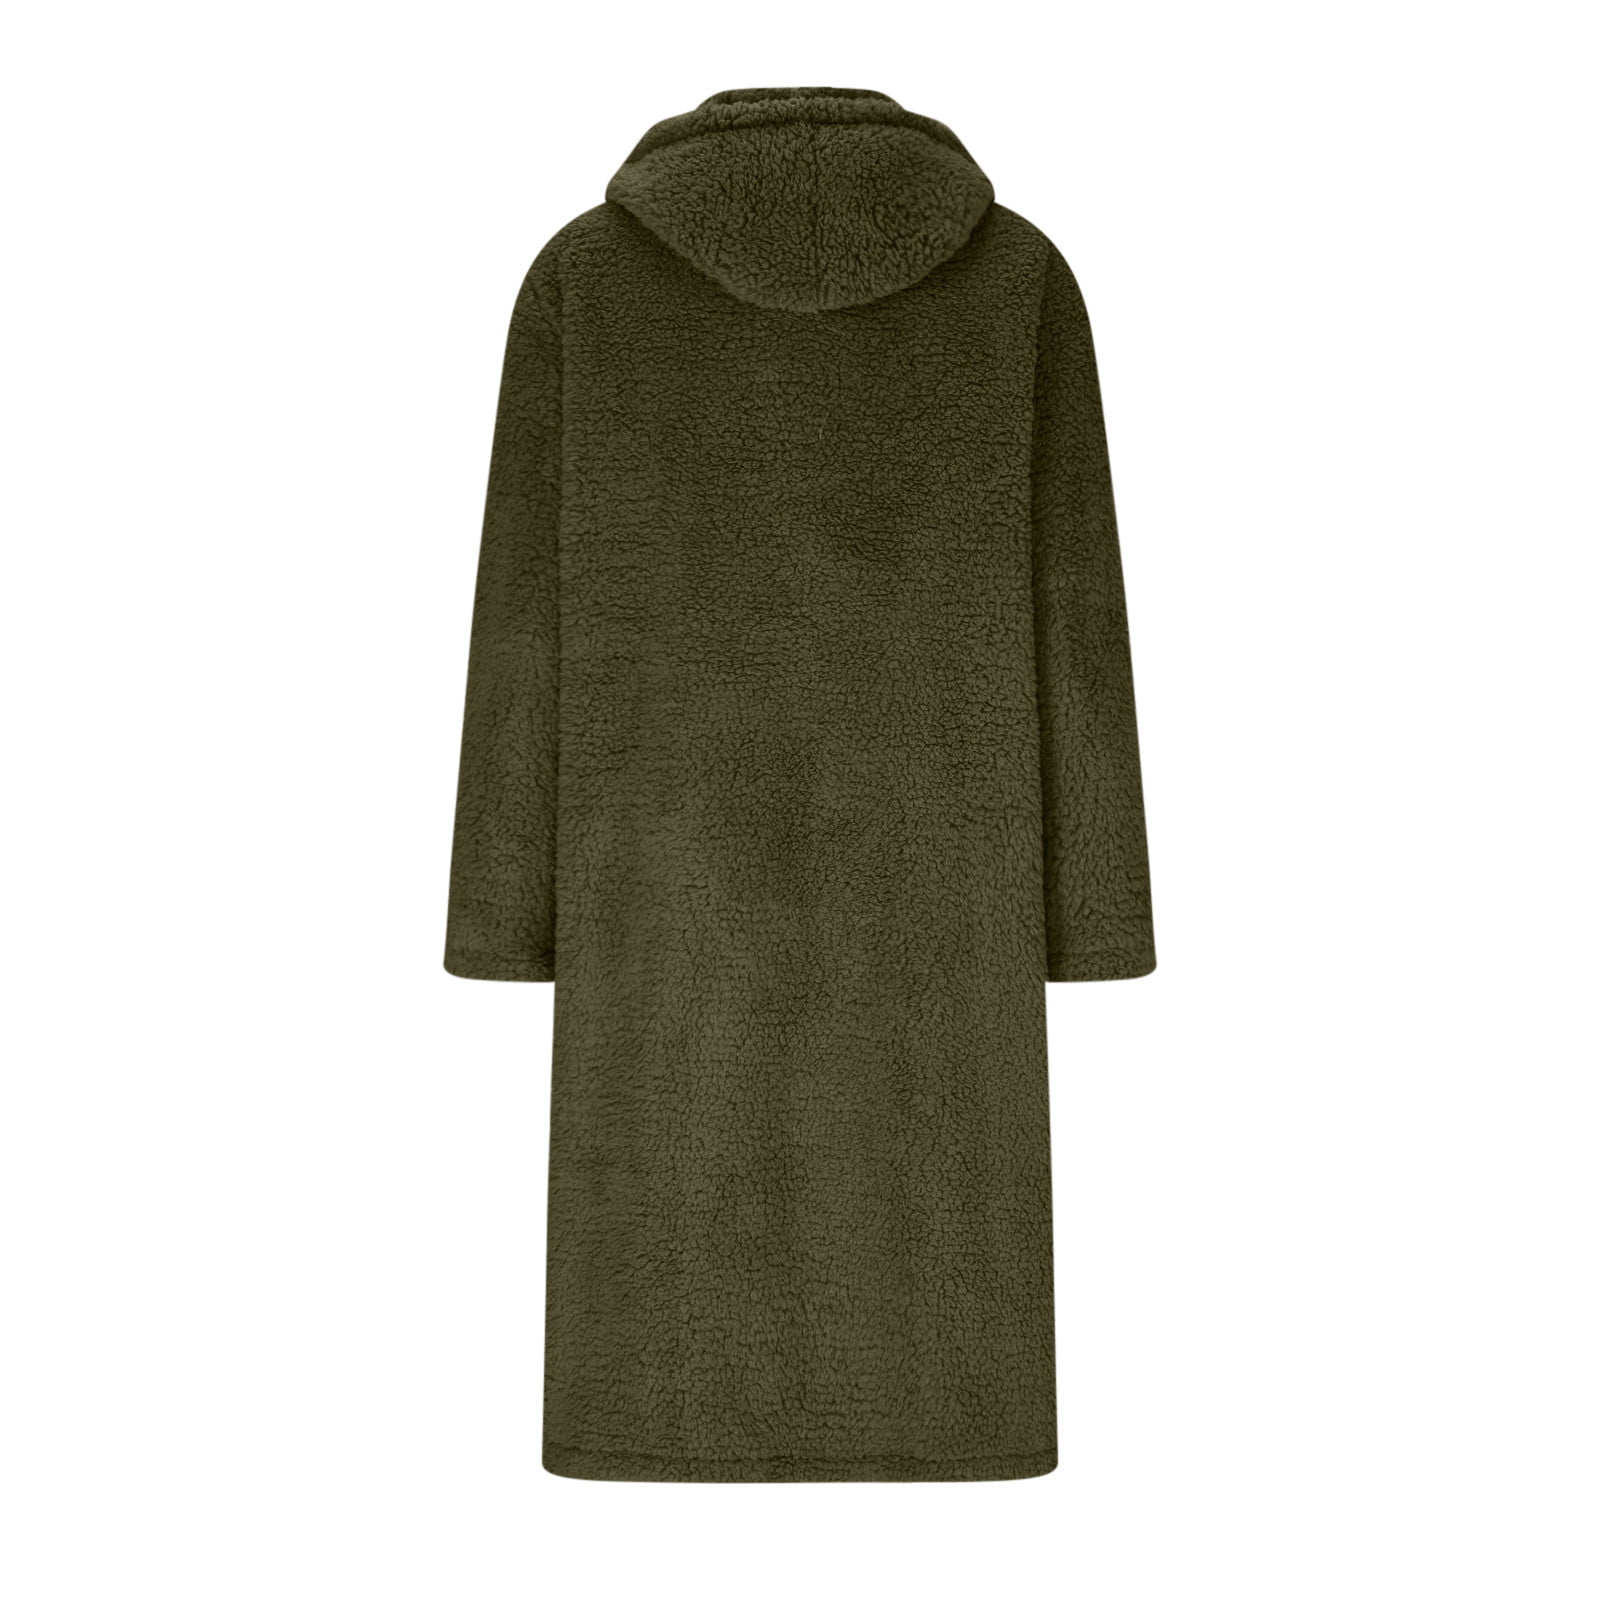 Winter Warm Sherpa Coats Jackets For Women Plus Size Hooded Faux Fur Solid  Color Long Pea Coat Outerwear 